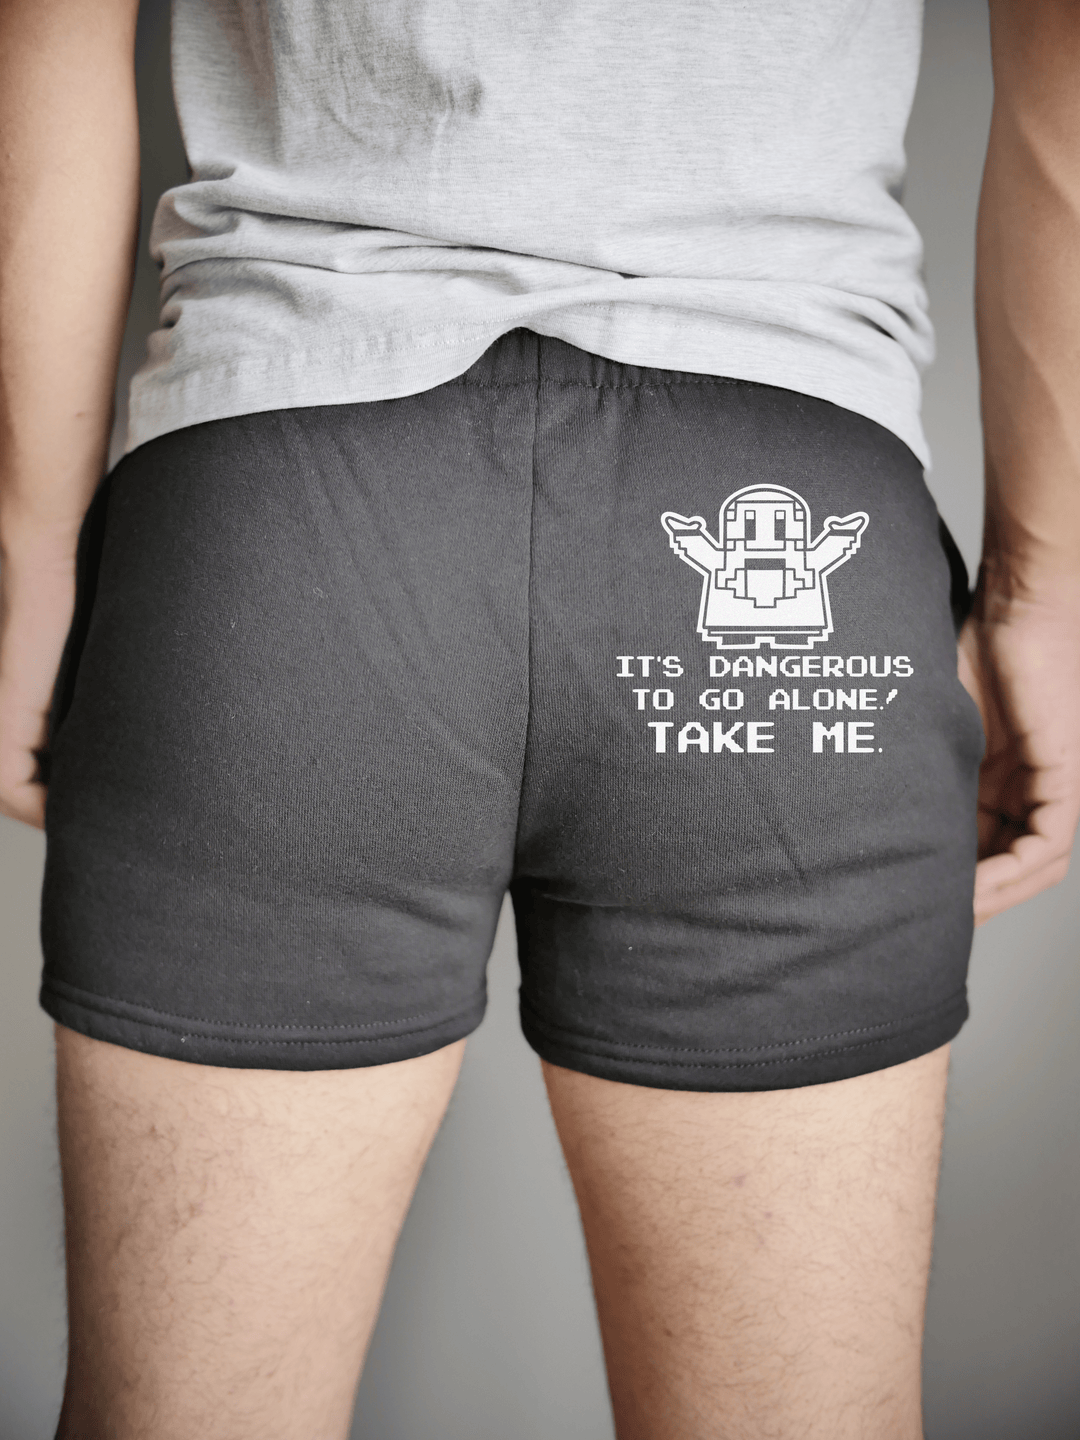 PixelThat Punderwear Shorts Black / S / Back It's Dangerous, Take Me Men's Gym Shorts